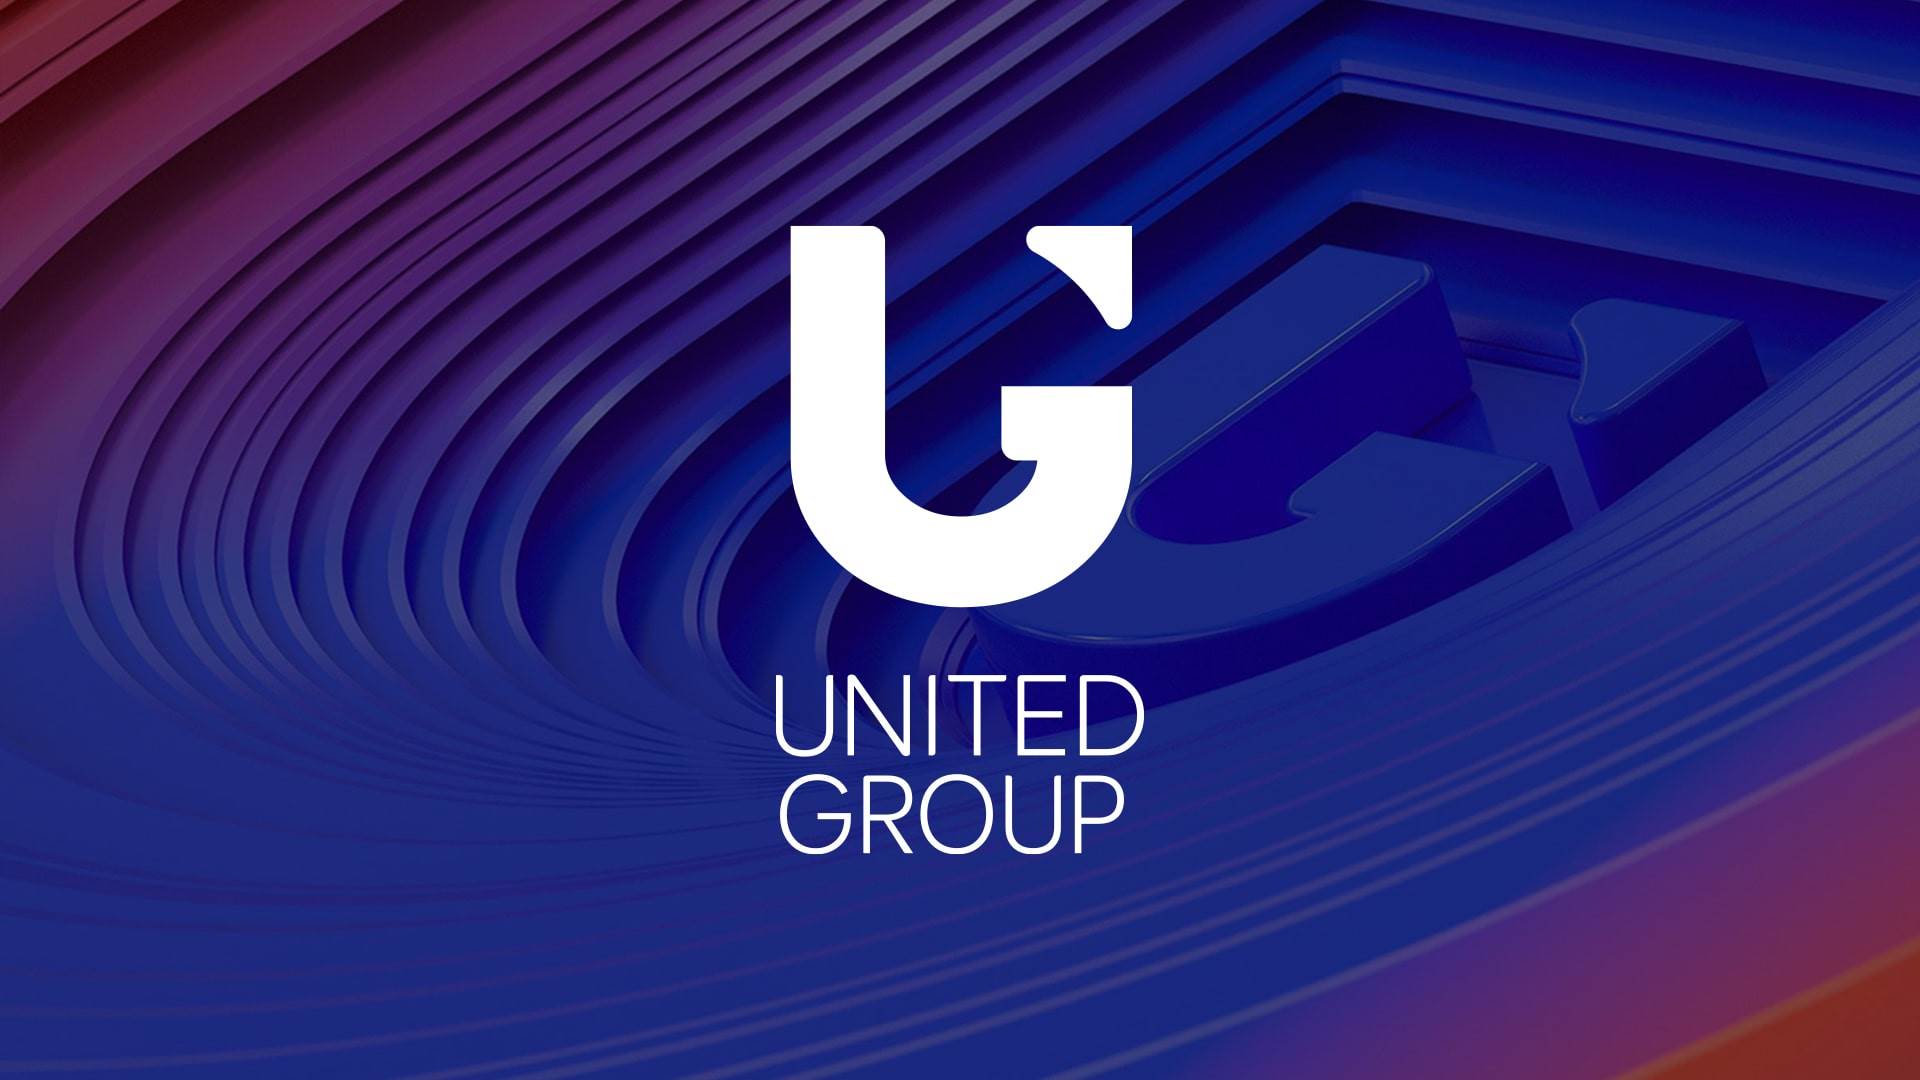 United Group: Deal €1,22 δισ. με τη Saudi Telecom για την πώληση πύργων κινητής τηλεφωνίας